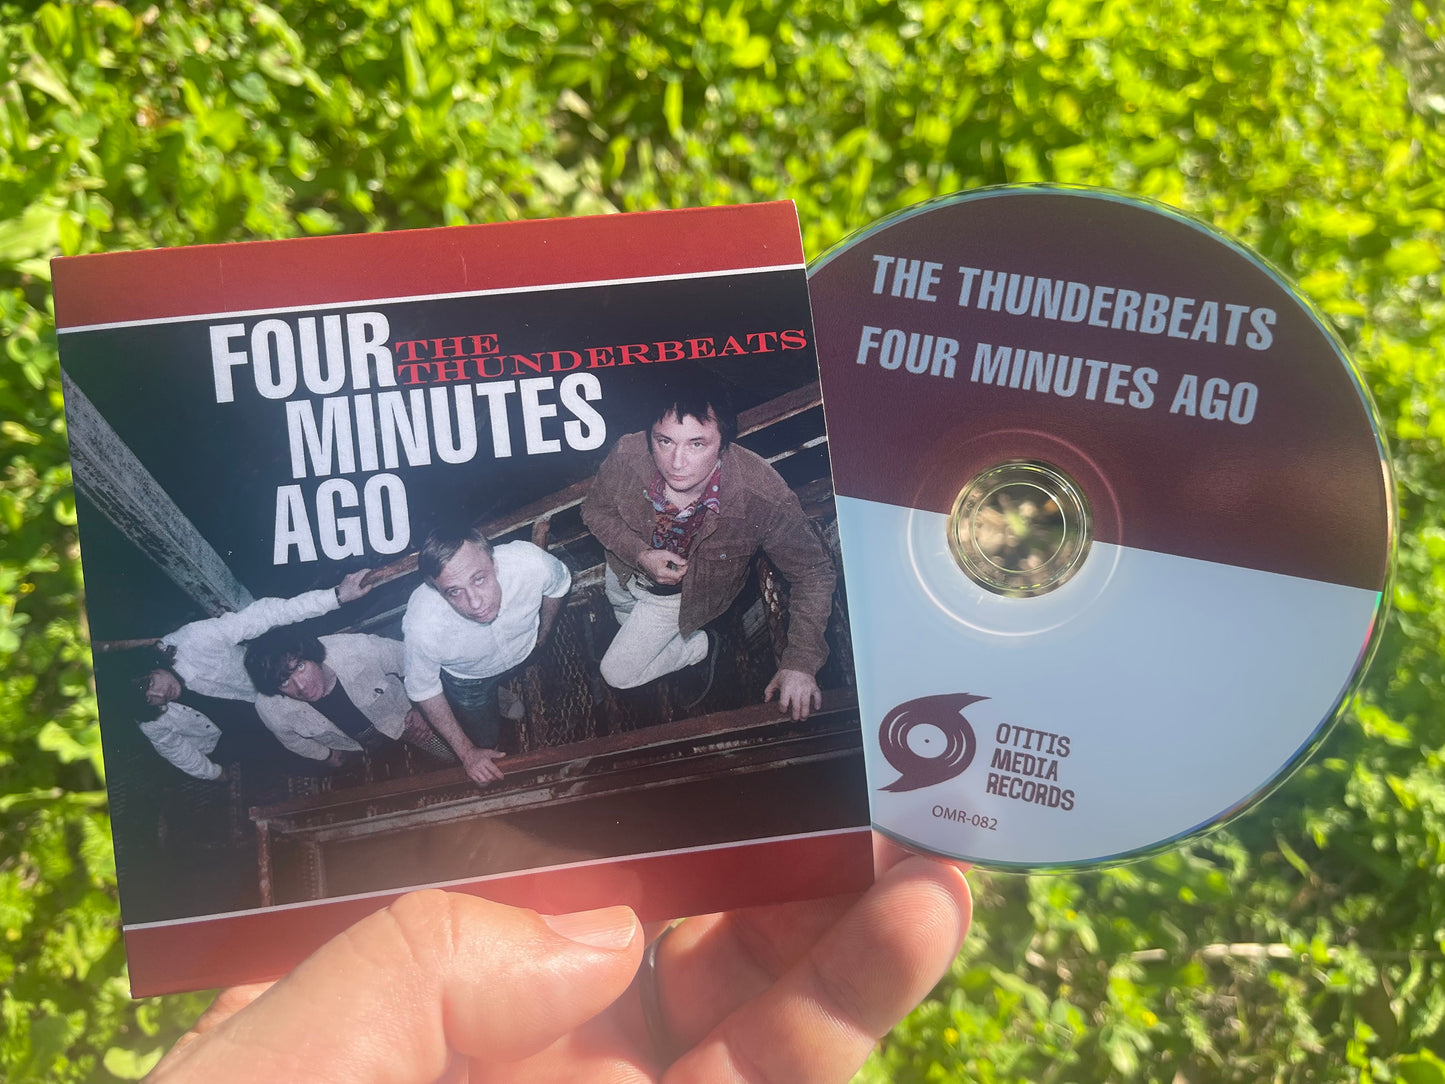 OMR-082 The Thunderbeats “Four Minutes Ago” CD/LP (Pre-Order)